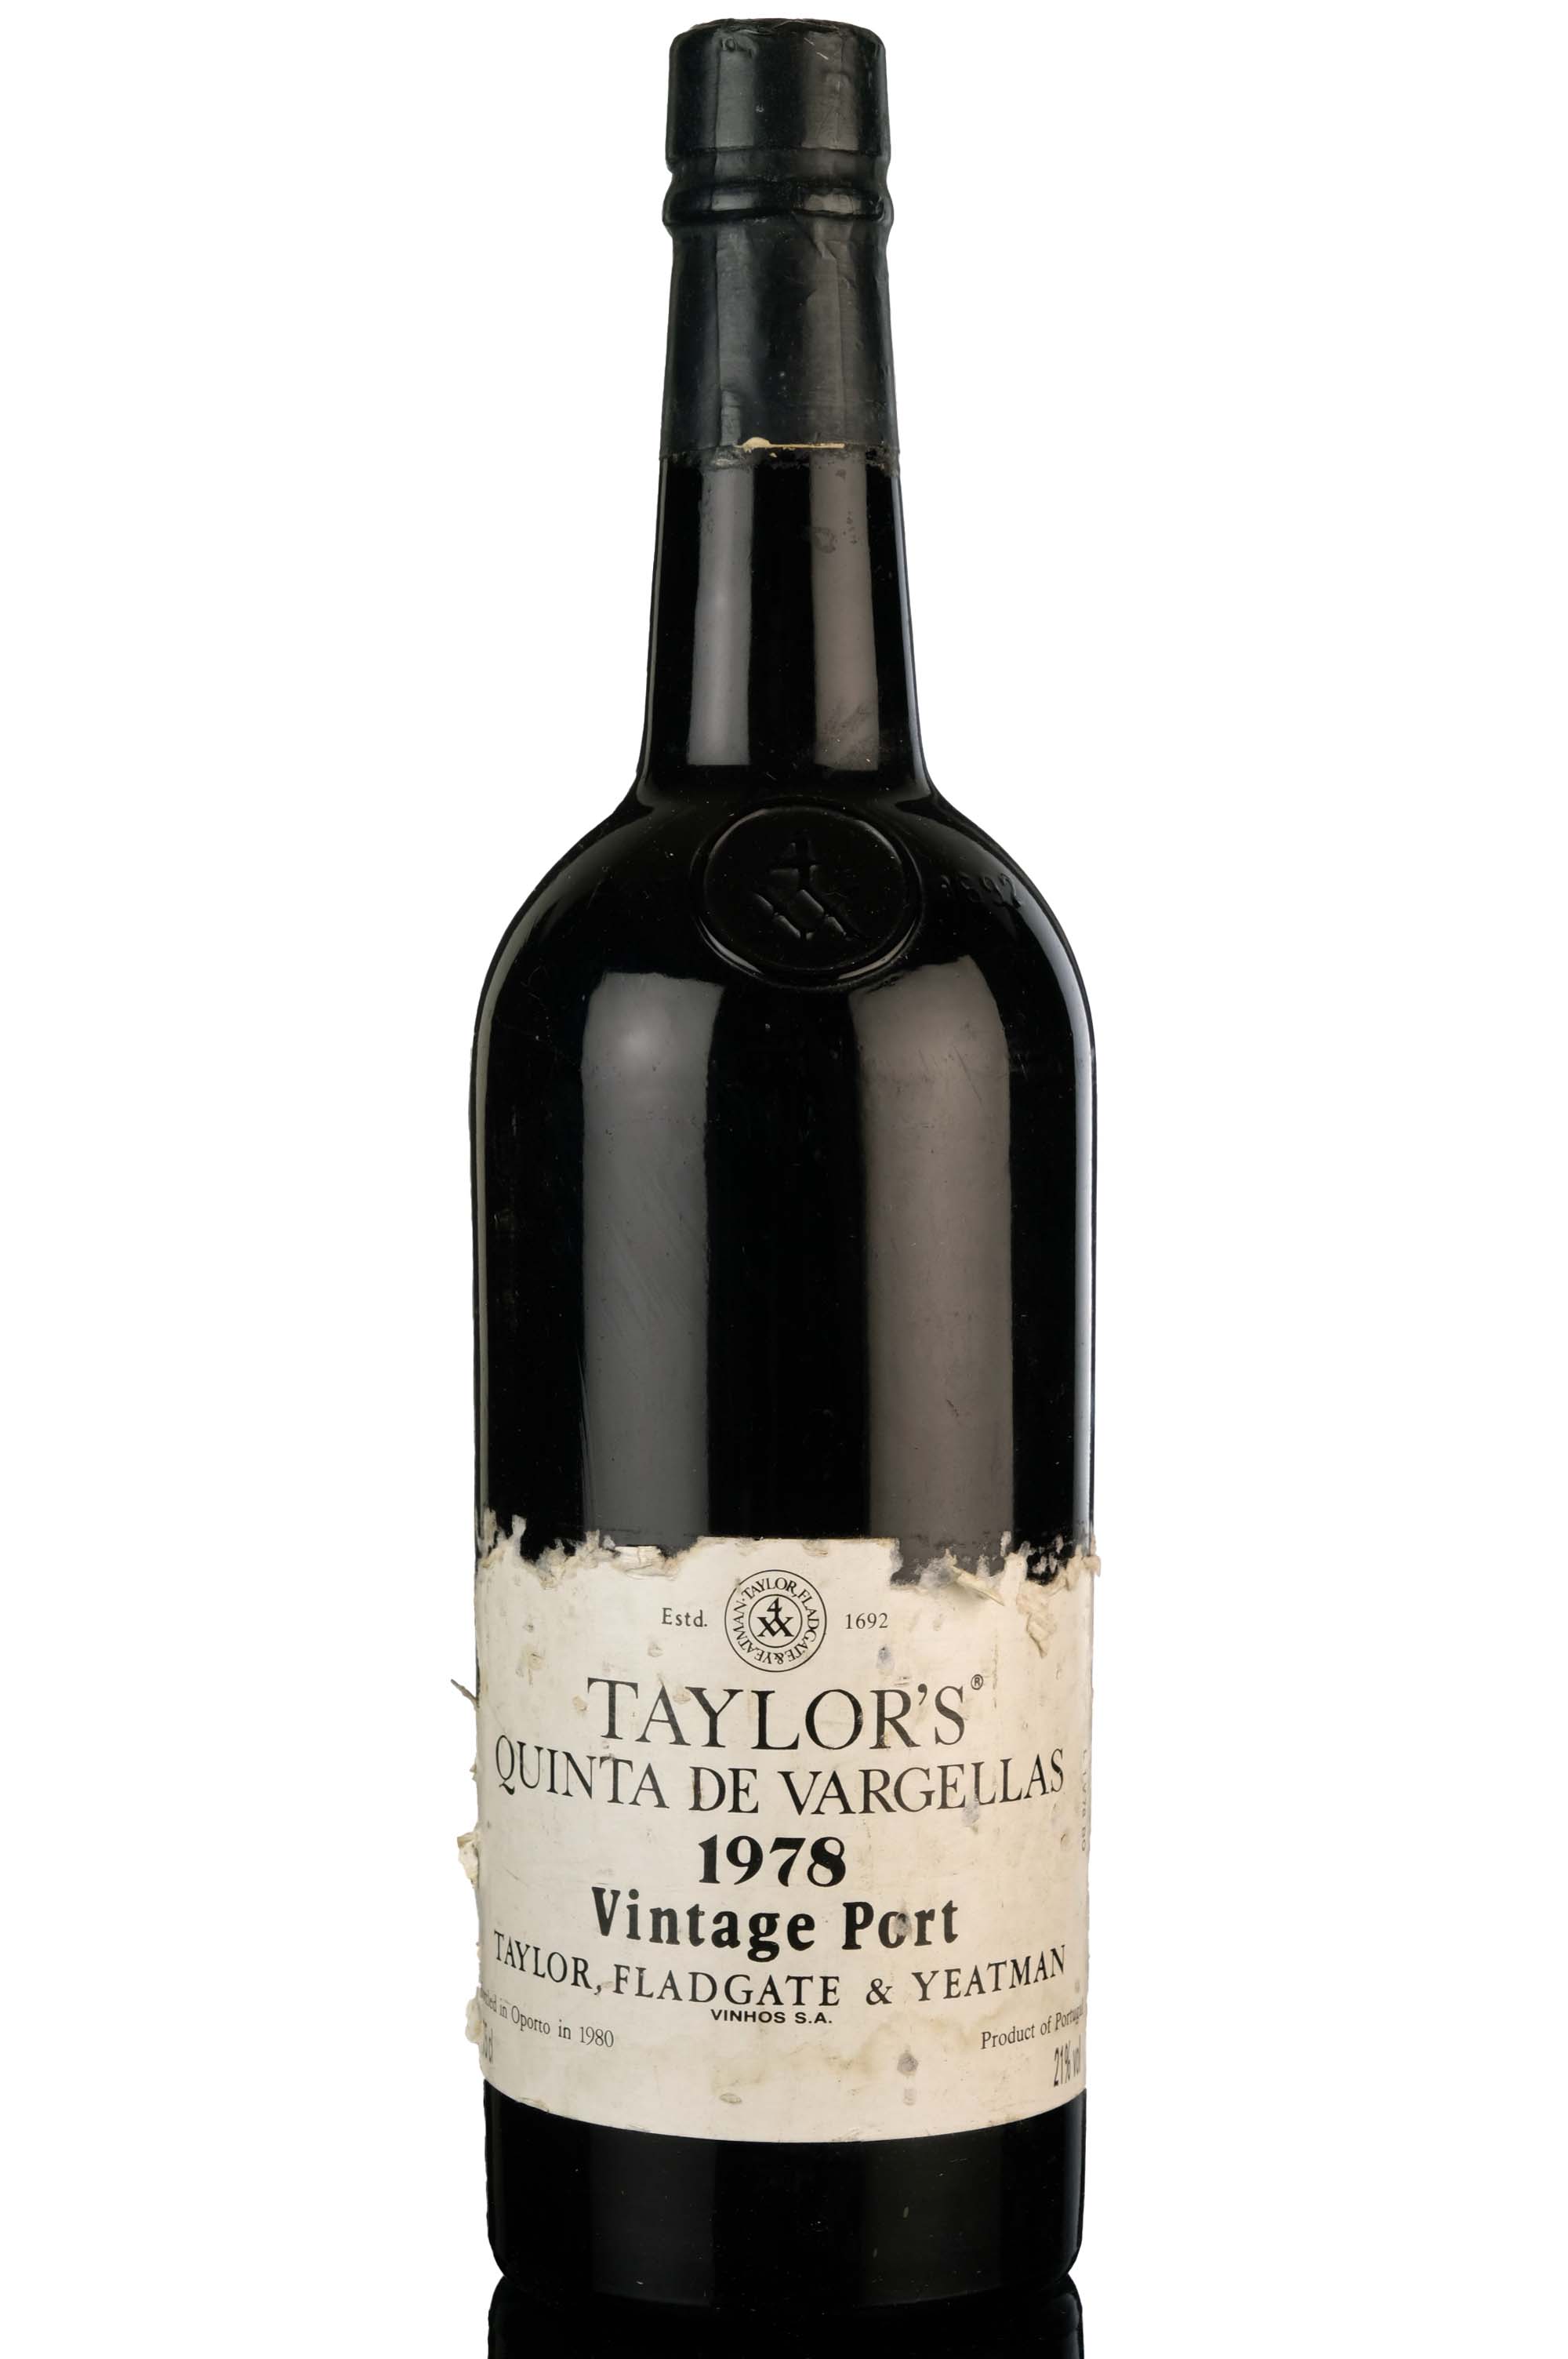 Taylors 1978 Vintage Port